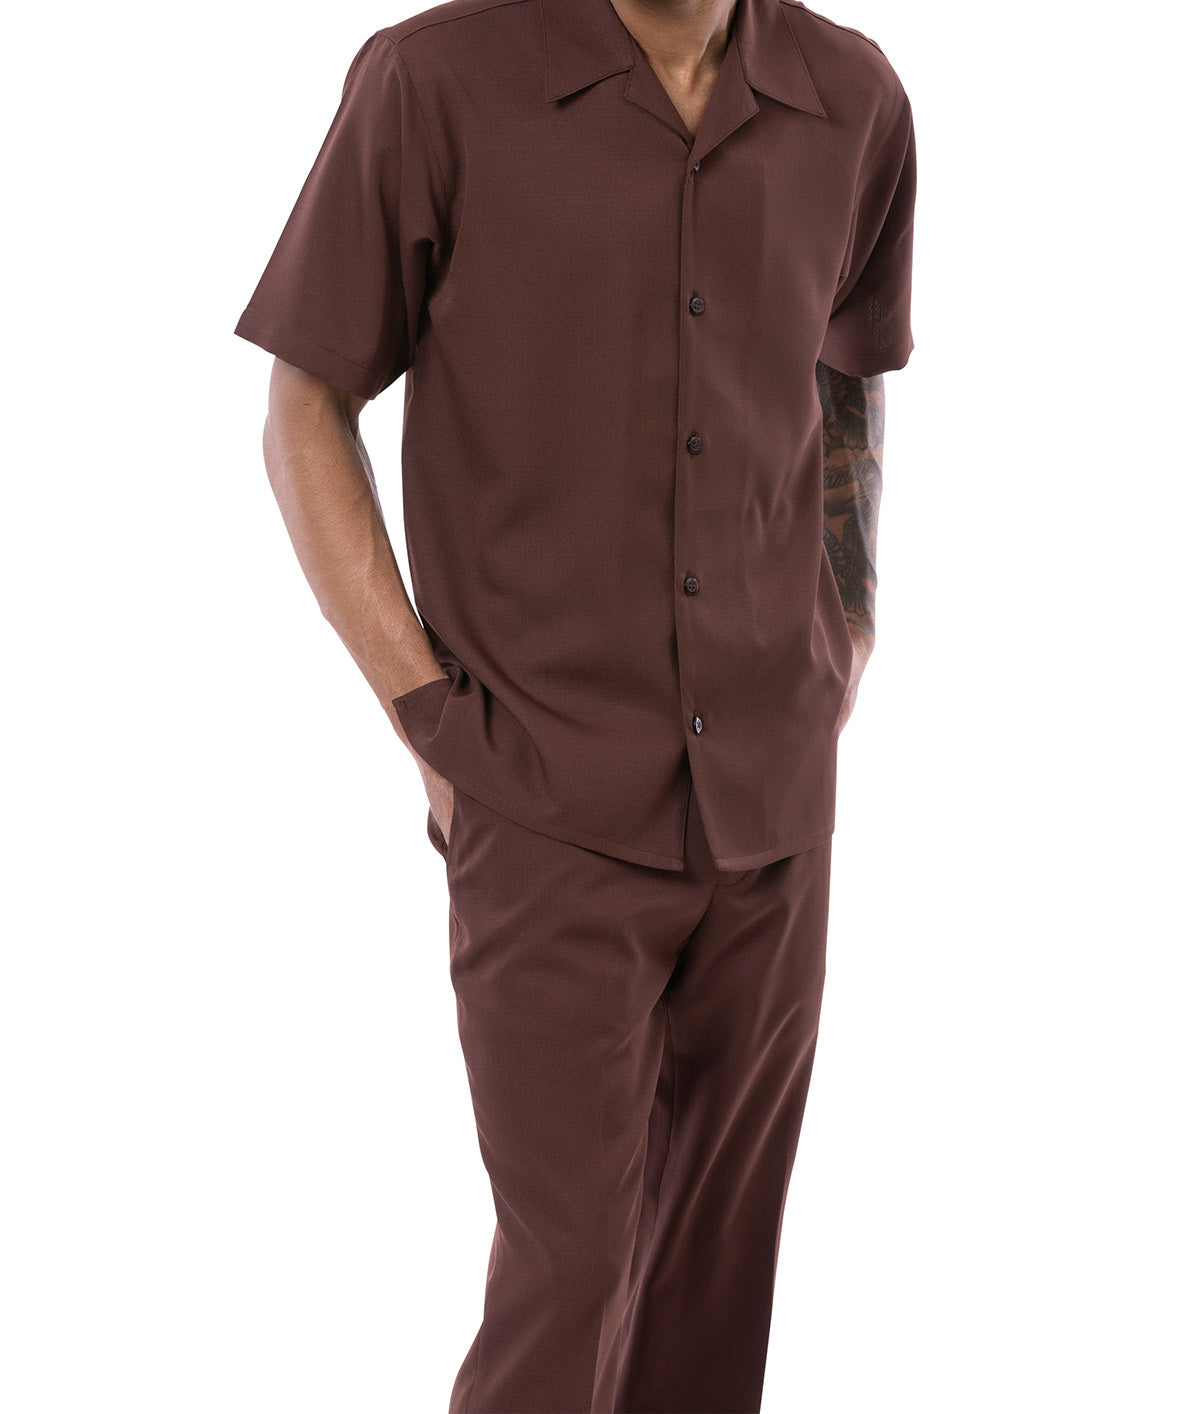 Solid Brown Walking Suit 2 Piece Short Sleeve Set